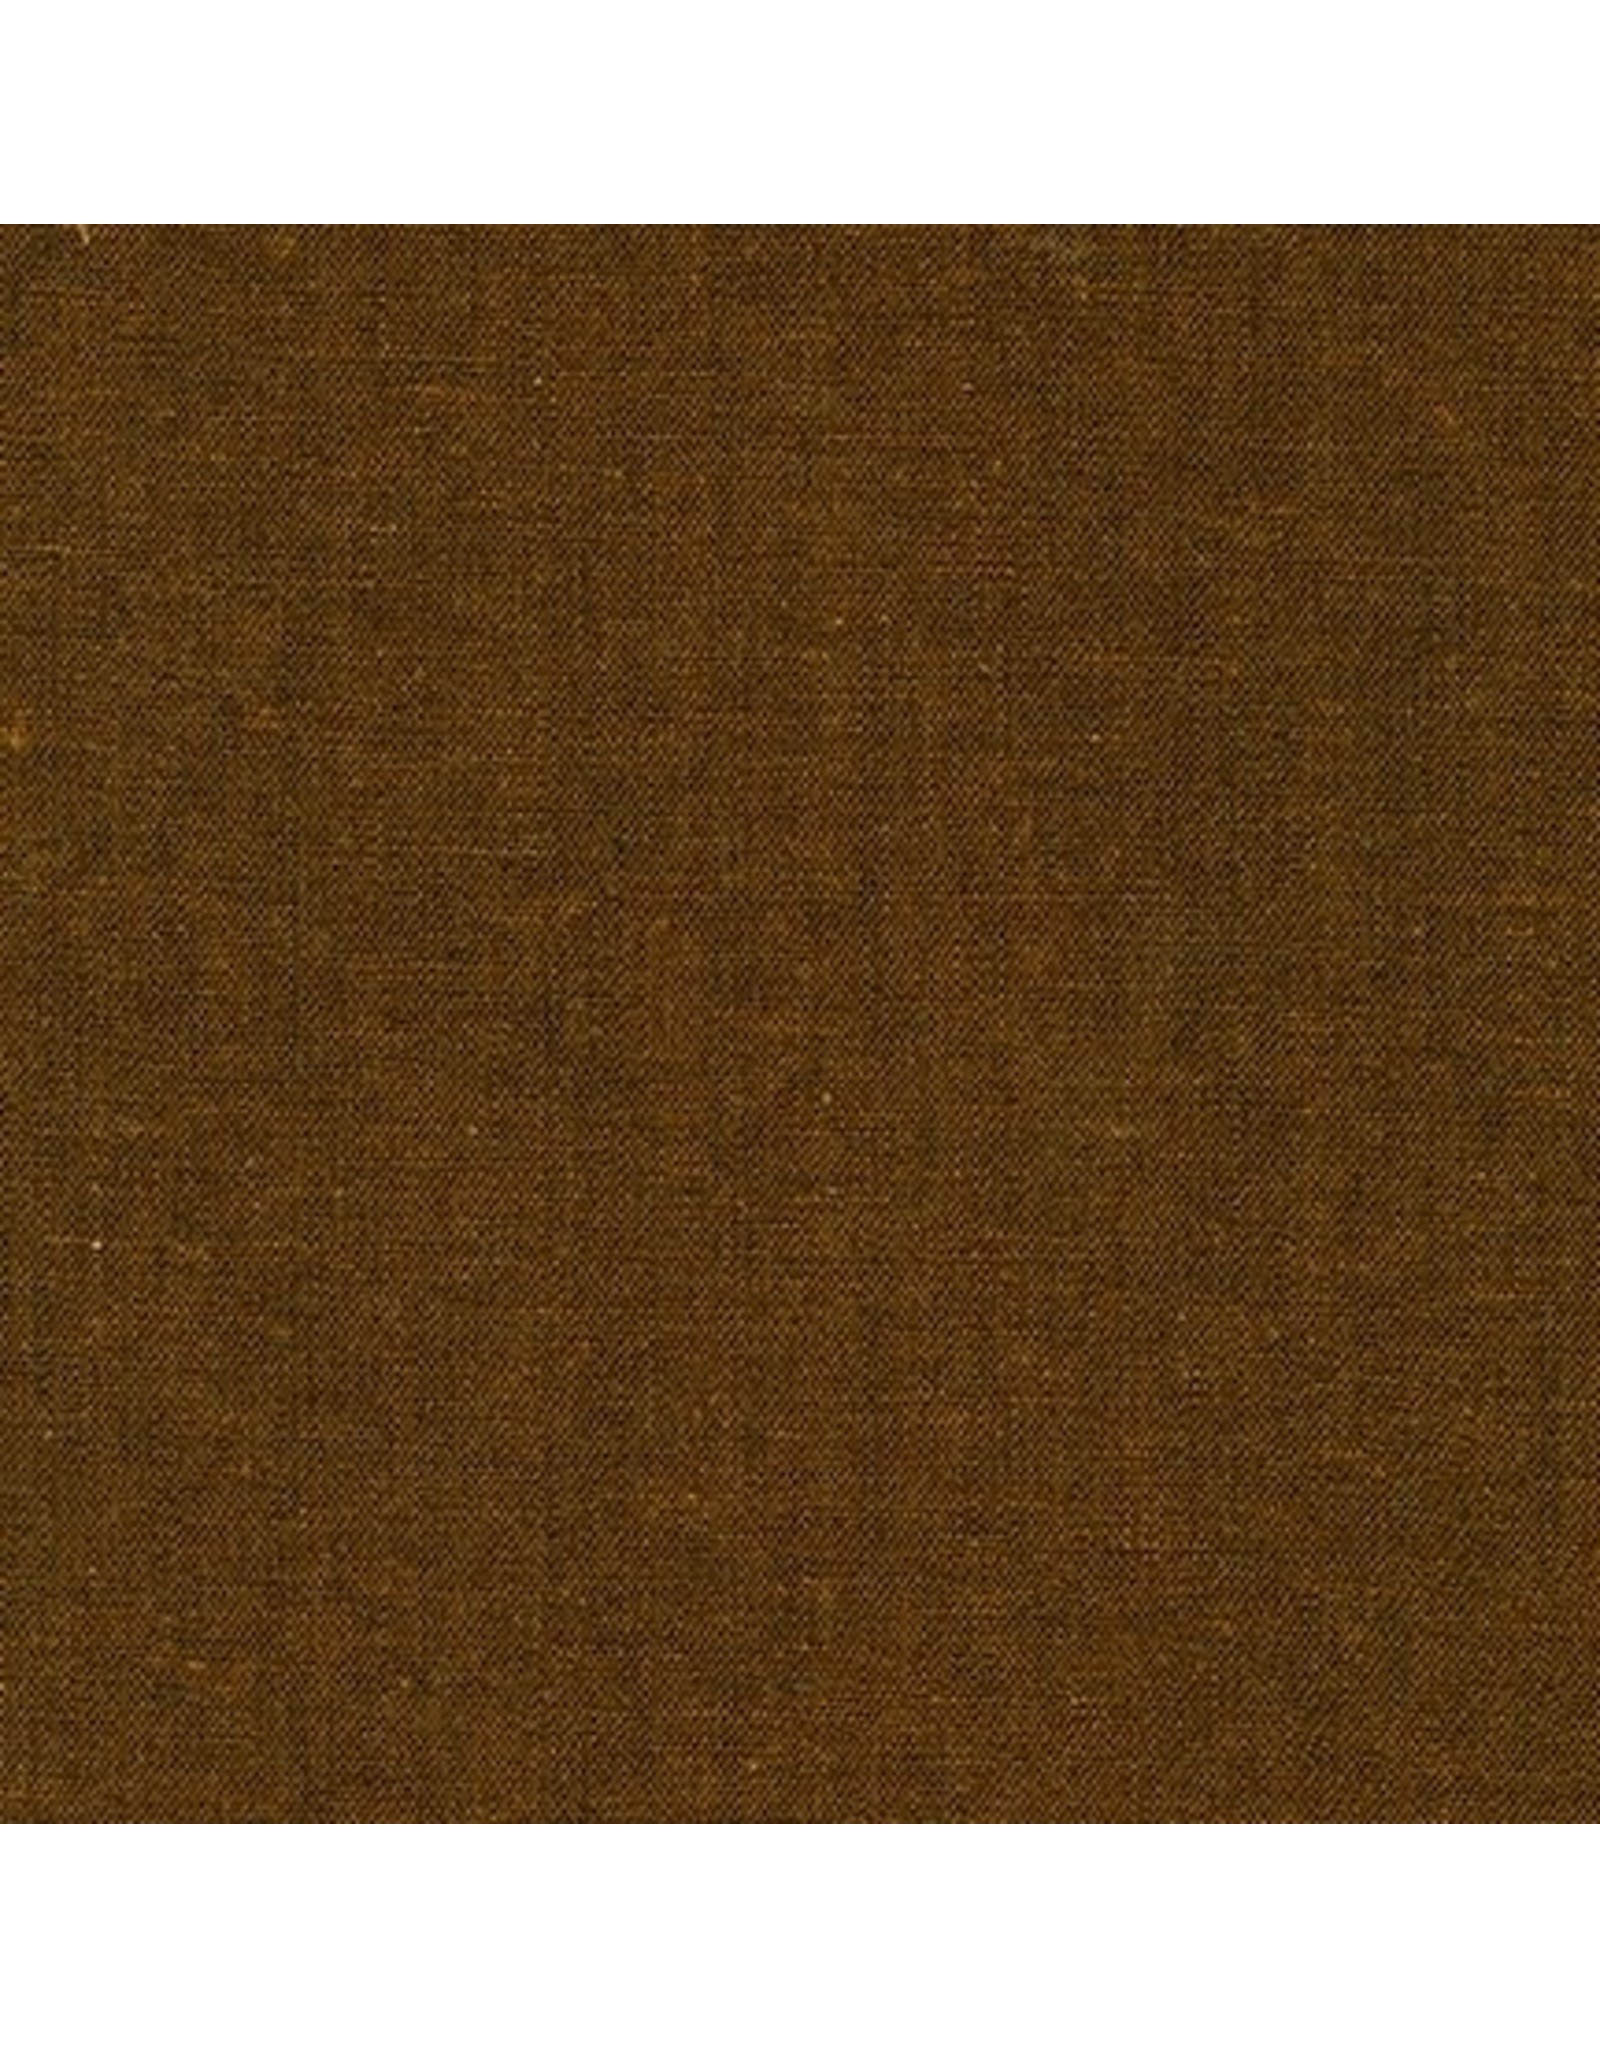 Robert Kaufman Linen, Essex Yarn Dyed in Cinnamon, Fabric Half-Yards